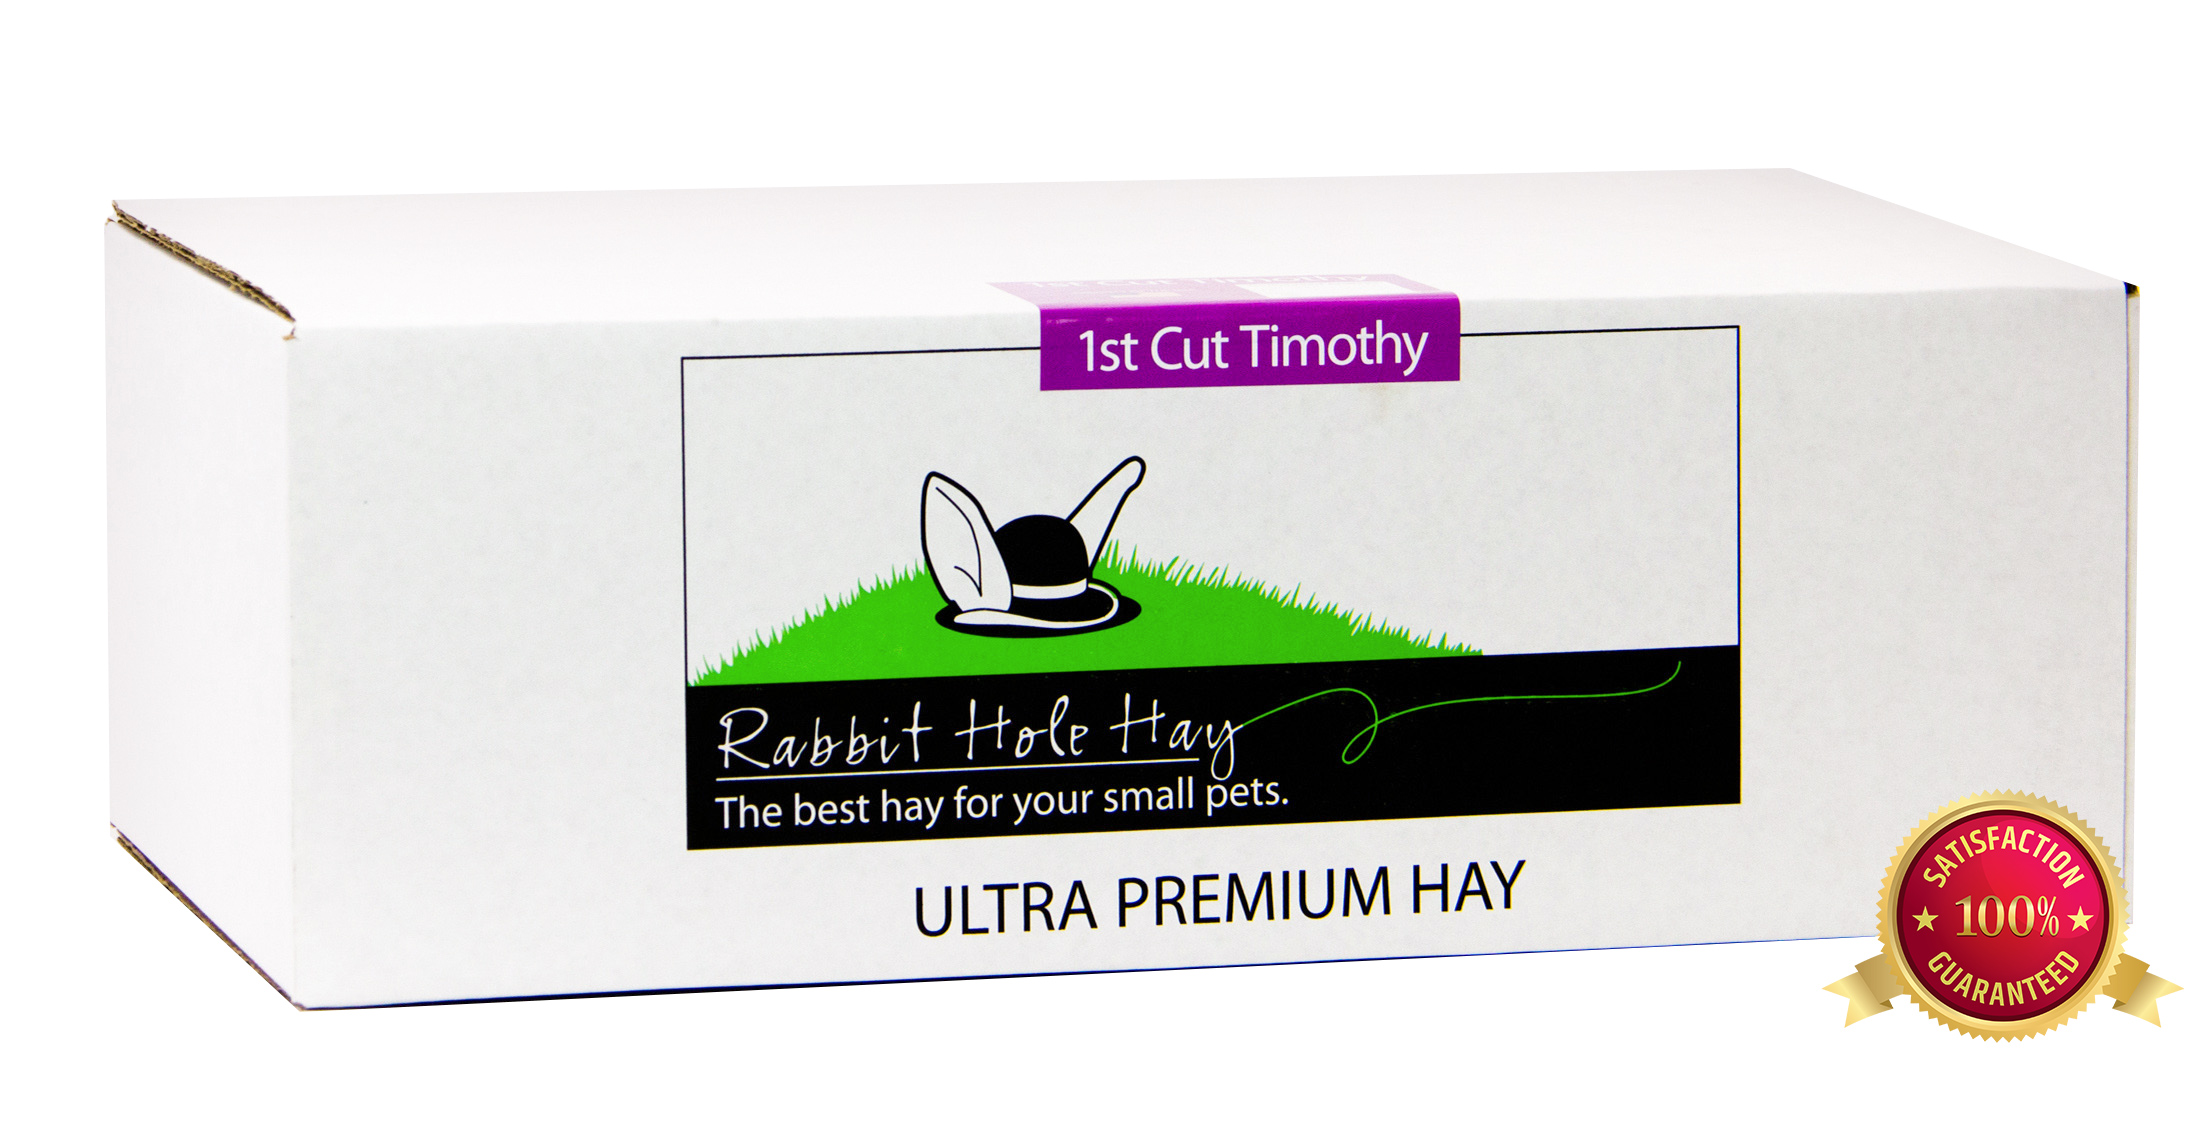 Rabbit Hole Hay, Ultra Premium Coarse Timothy Hay; 10lb box - image 1 of 2